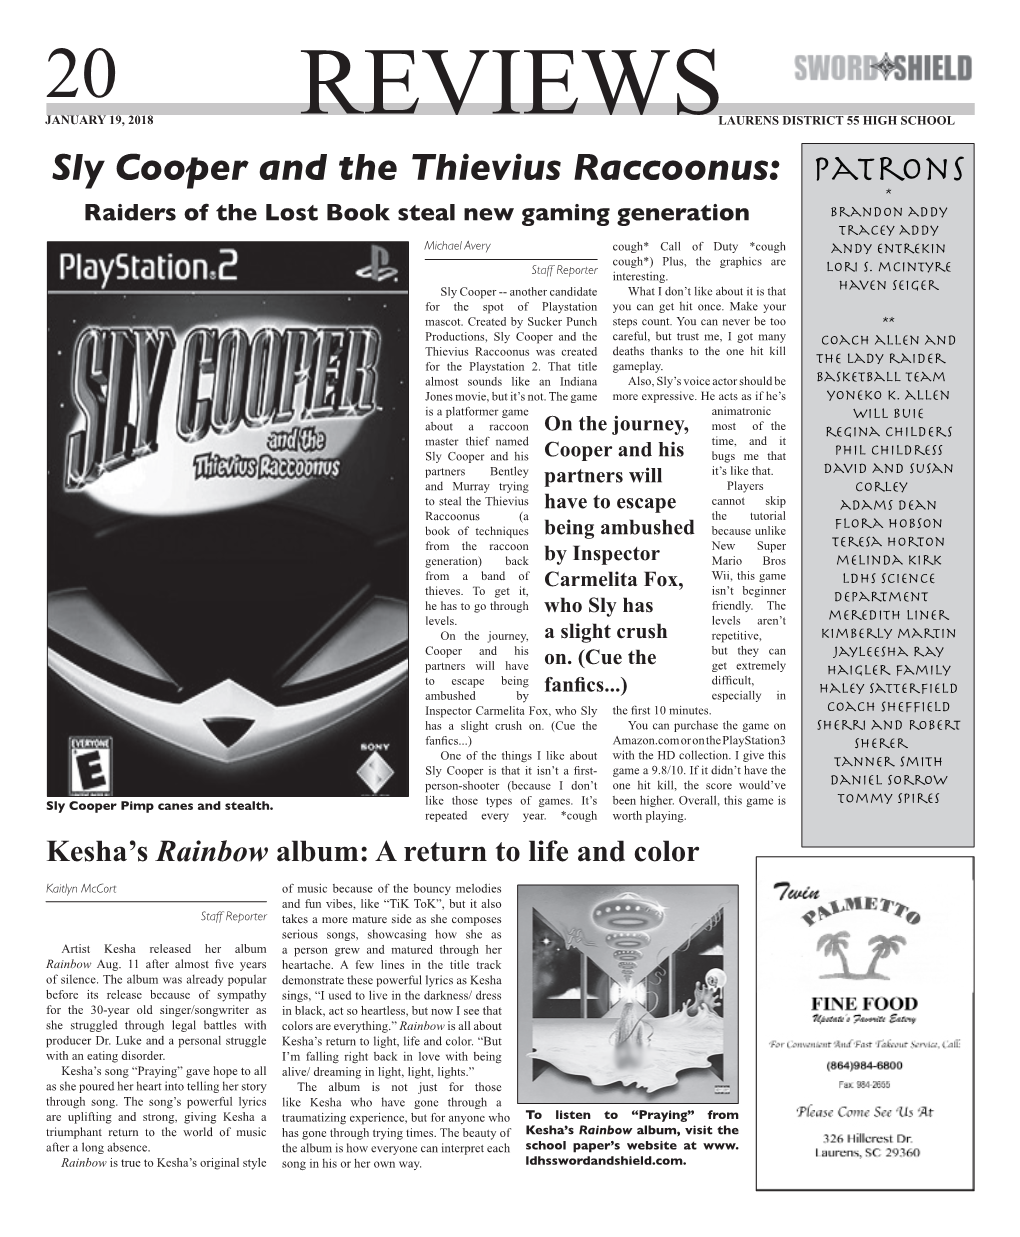 Sly Cooper and the Thievius Raccoonus: Patrons